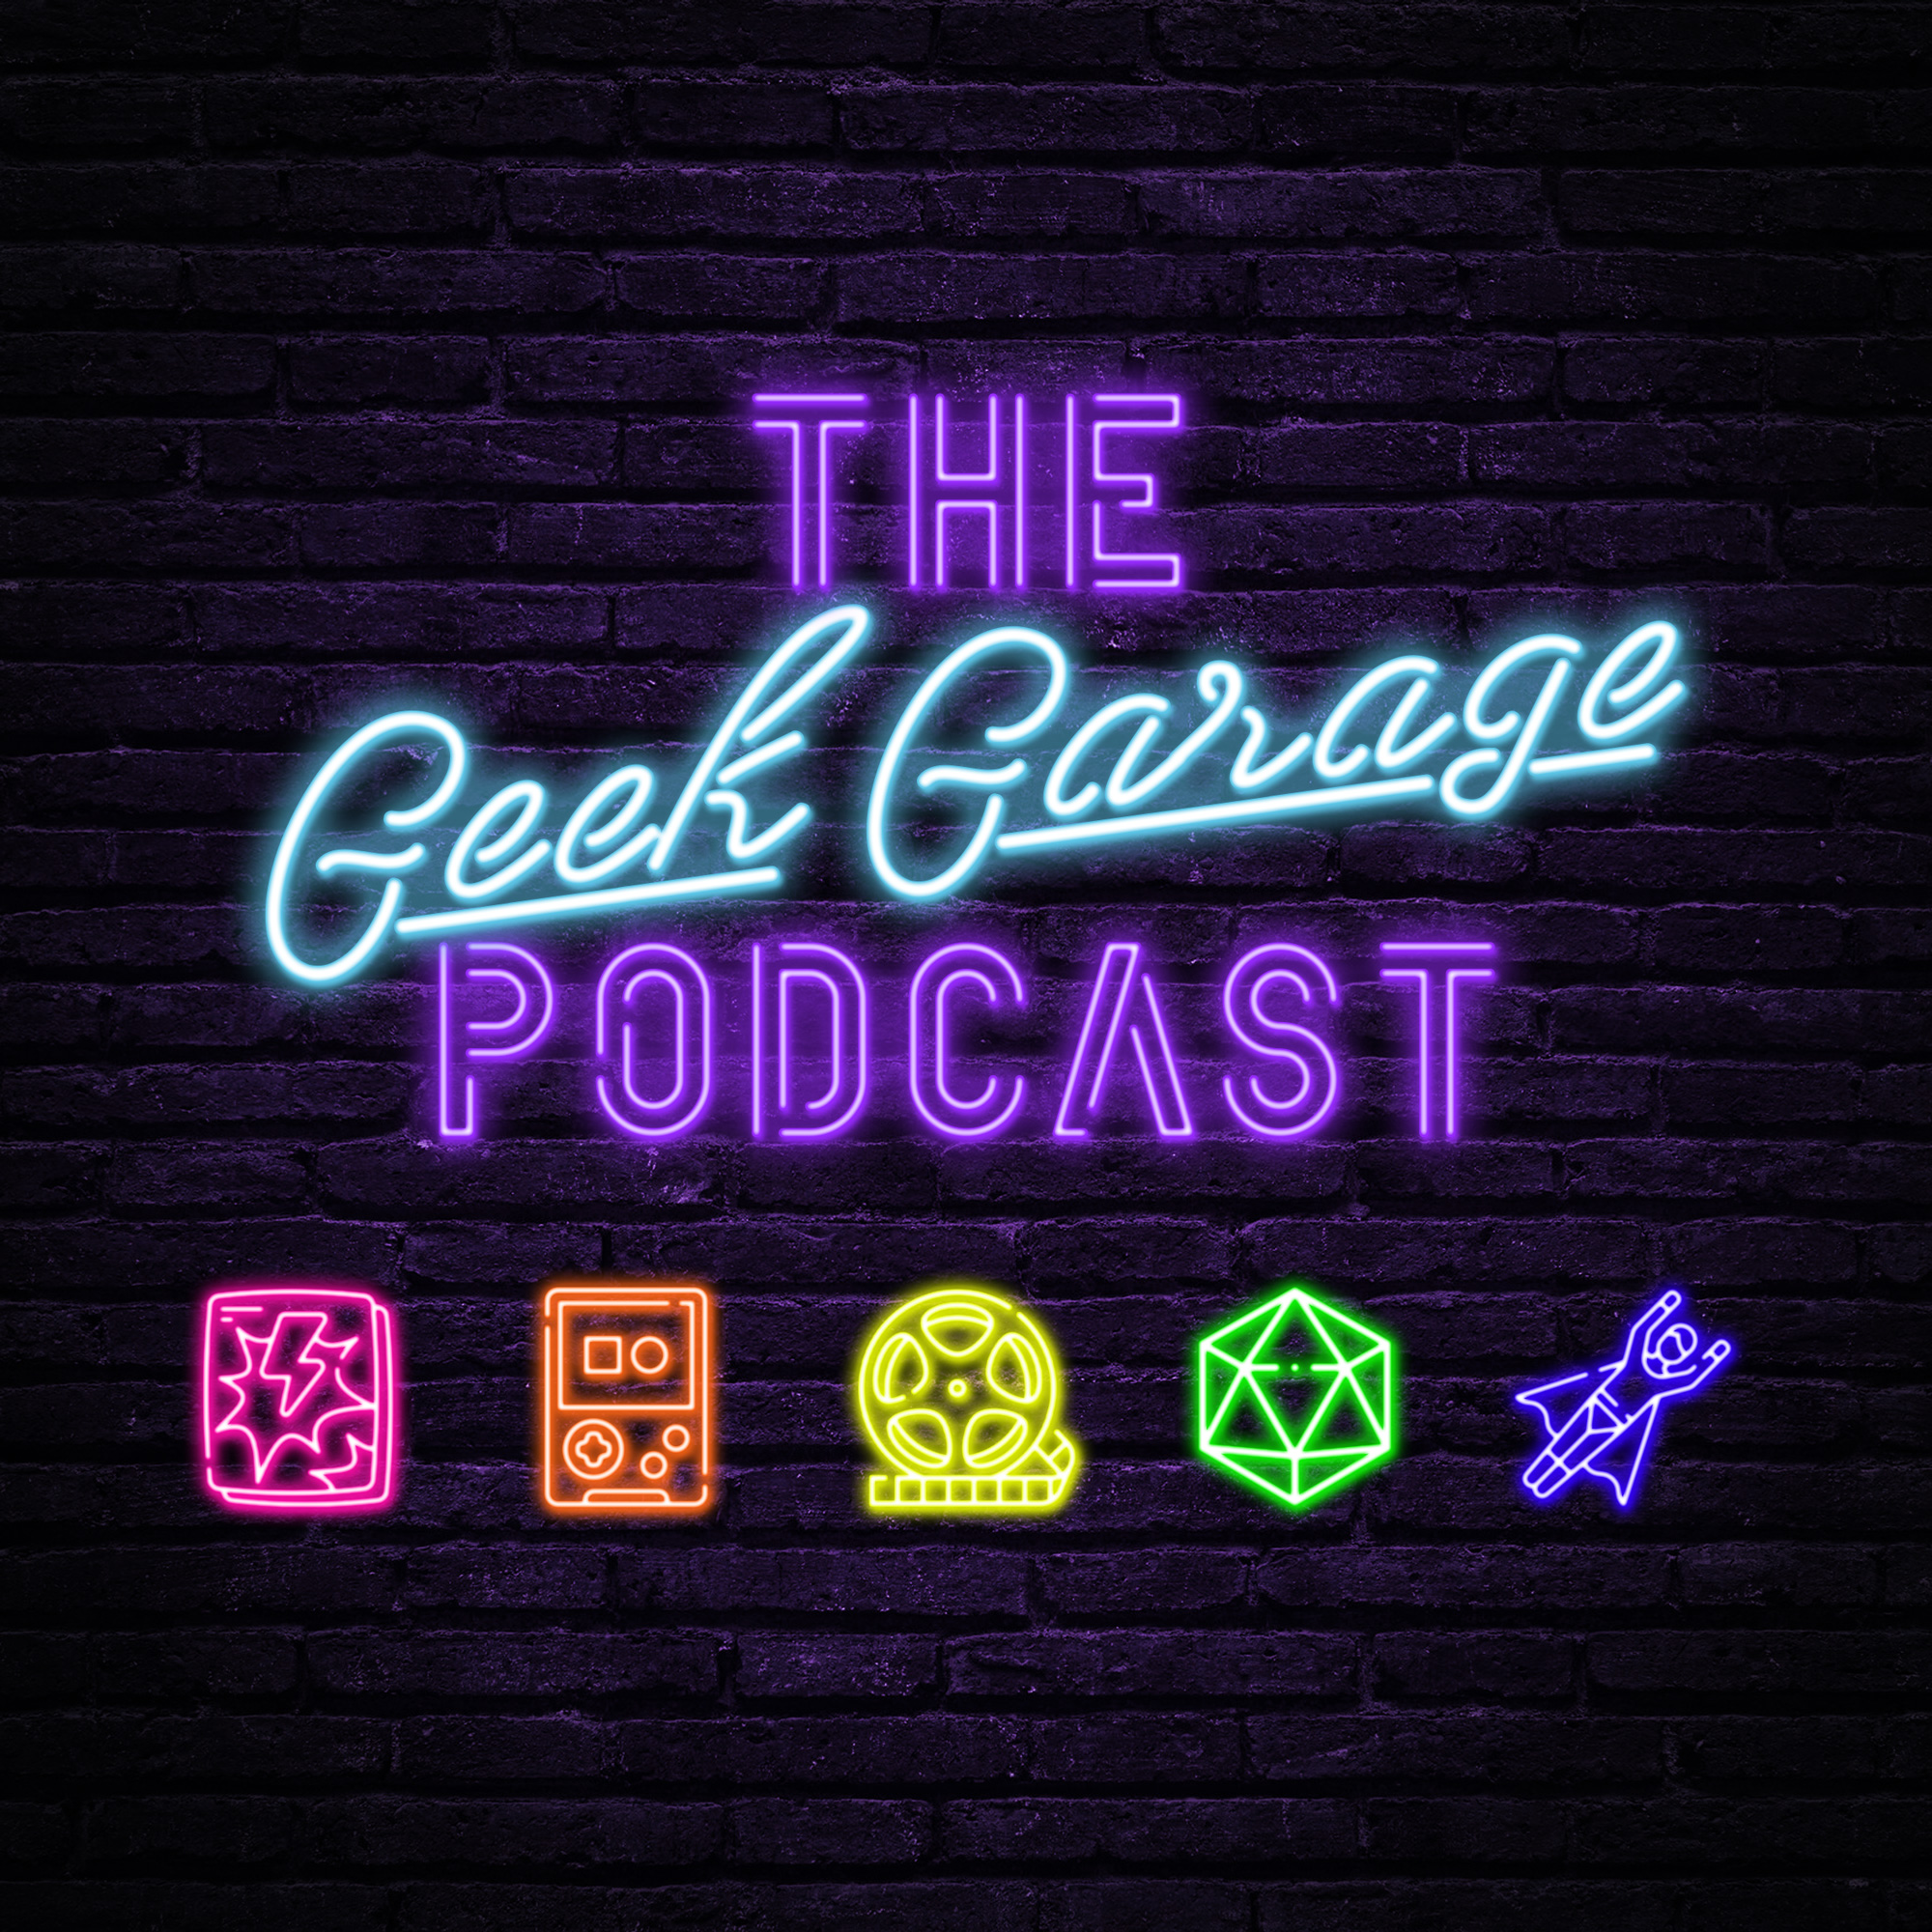 Show artwork for Geek Garage Podcast